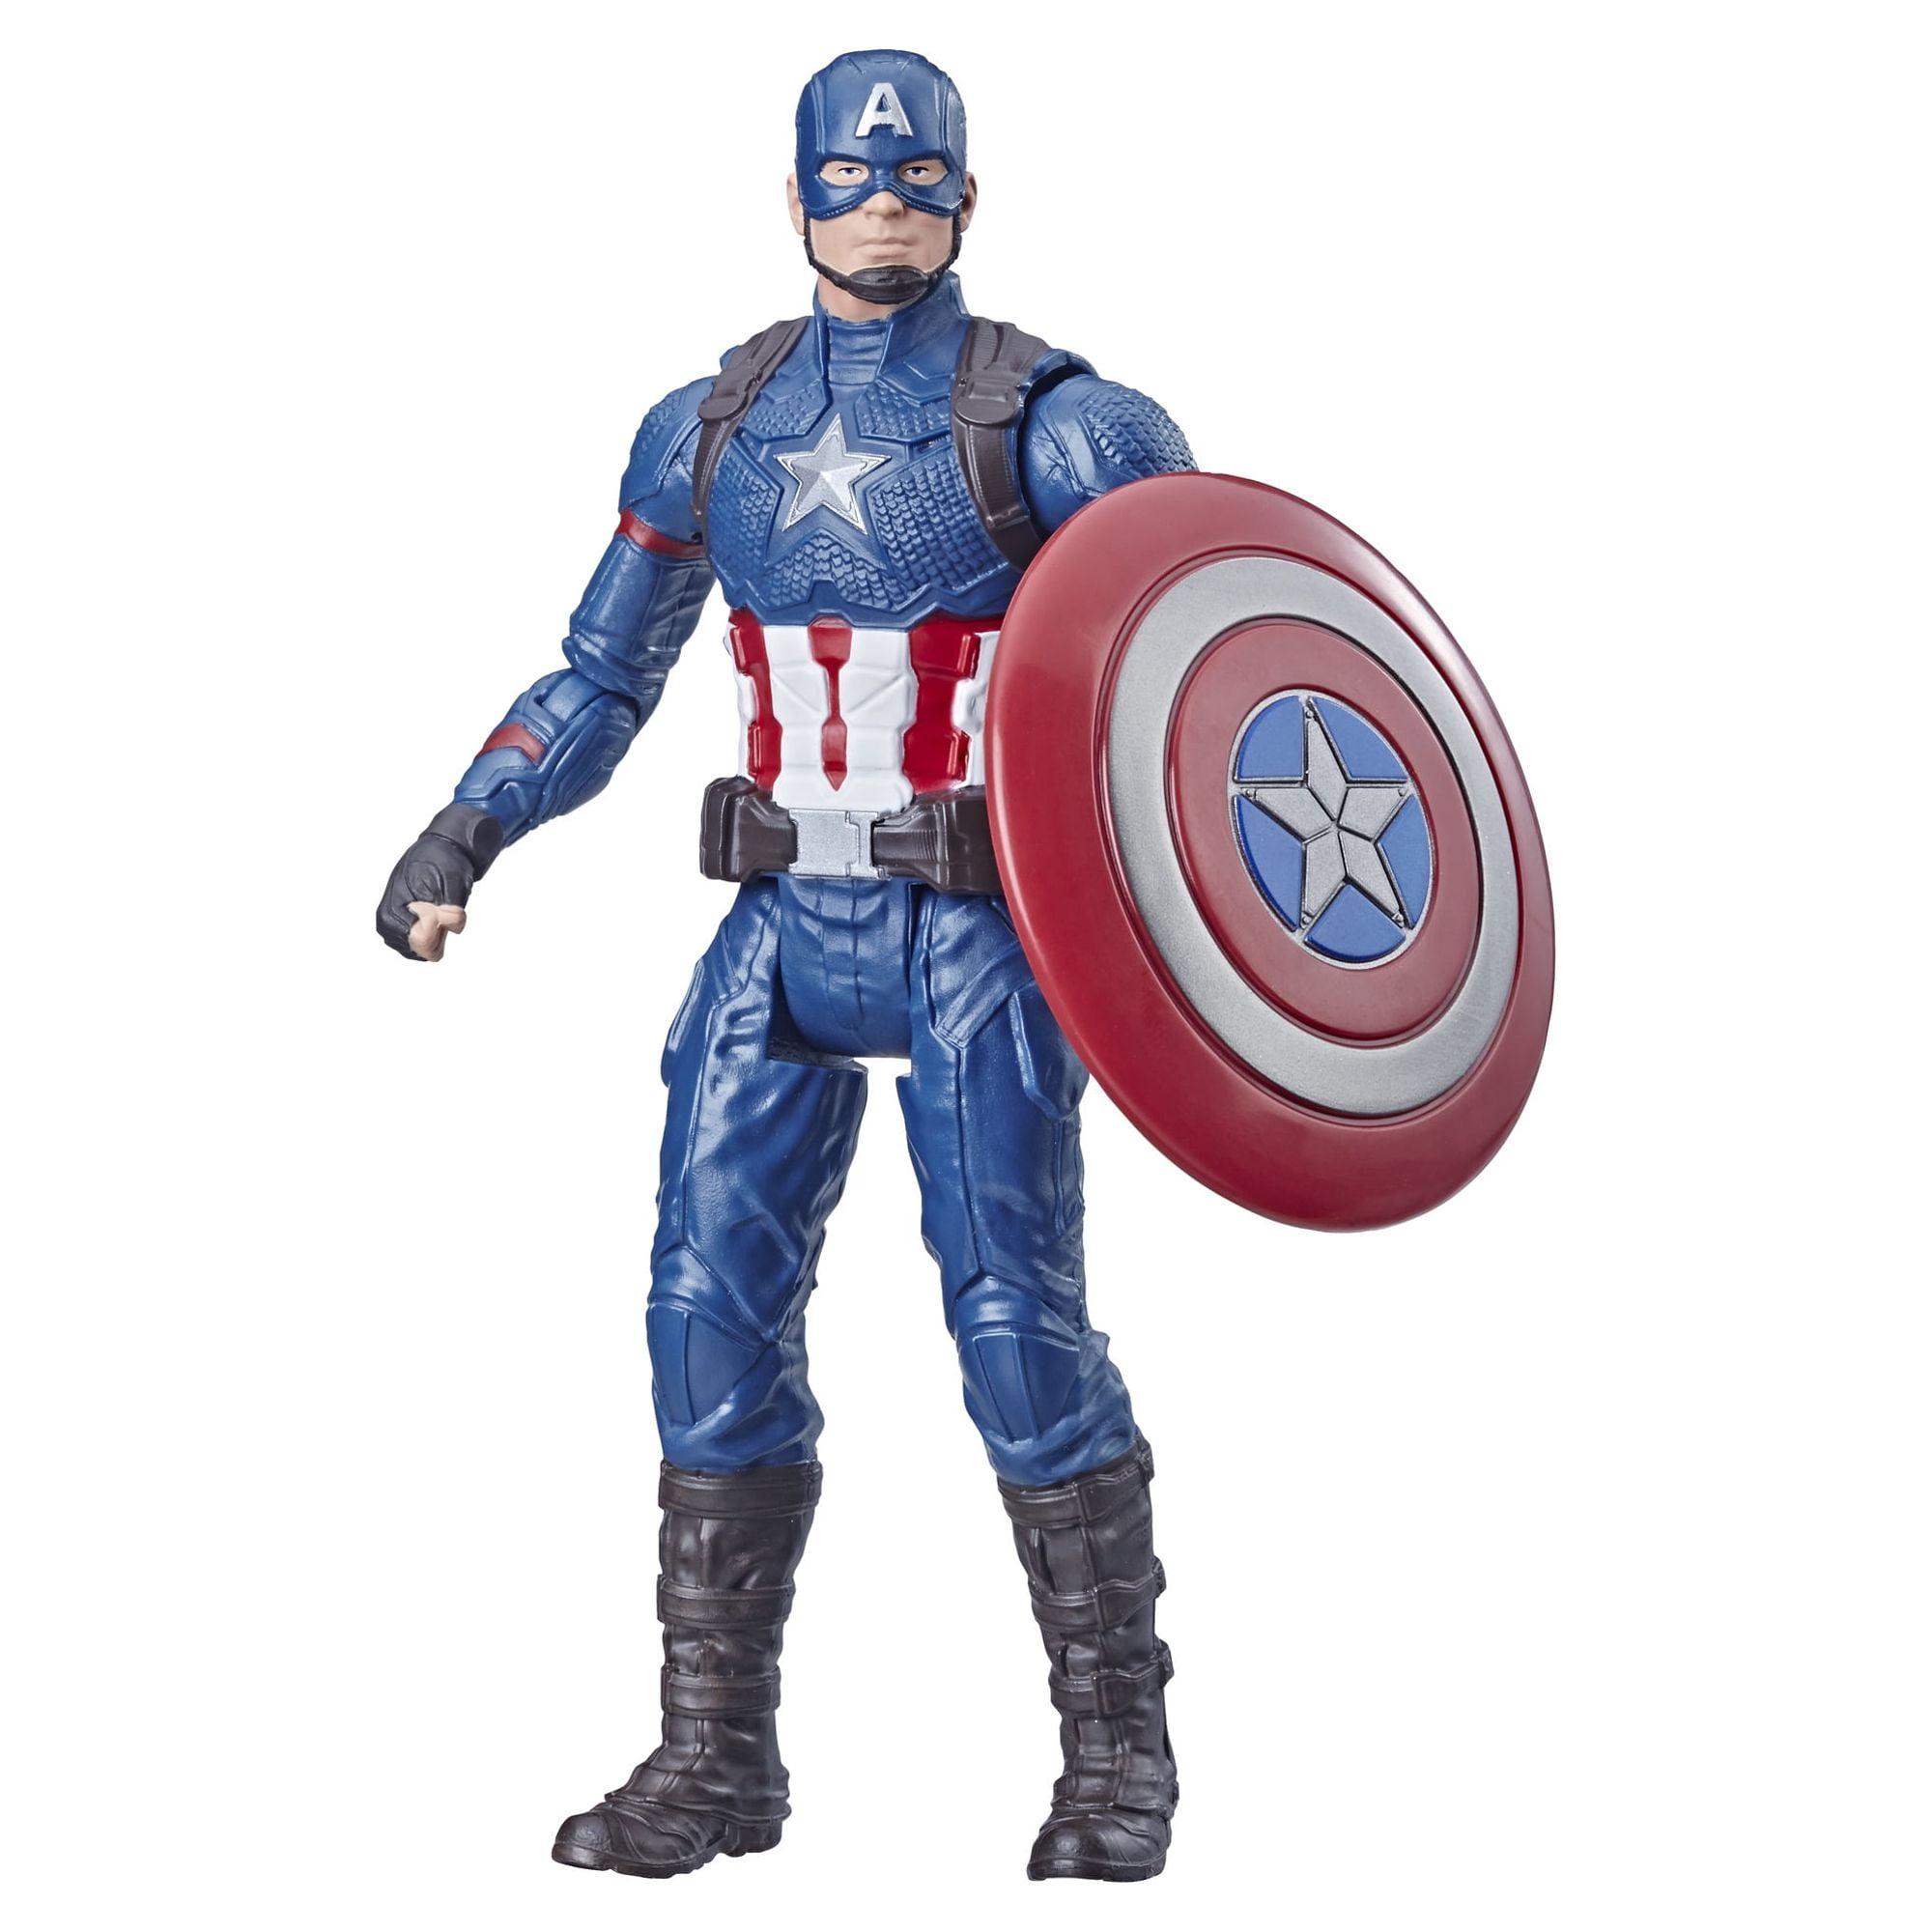 Marvel Avengers Captain America 6-Inch-Scale Super Hero Action